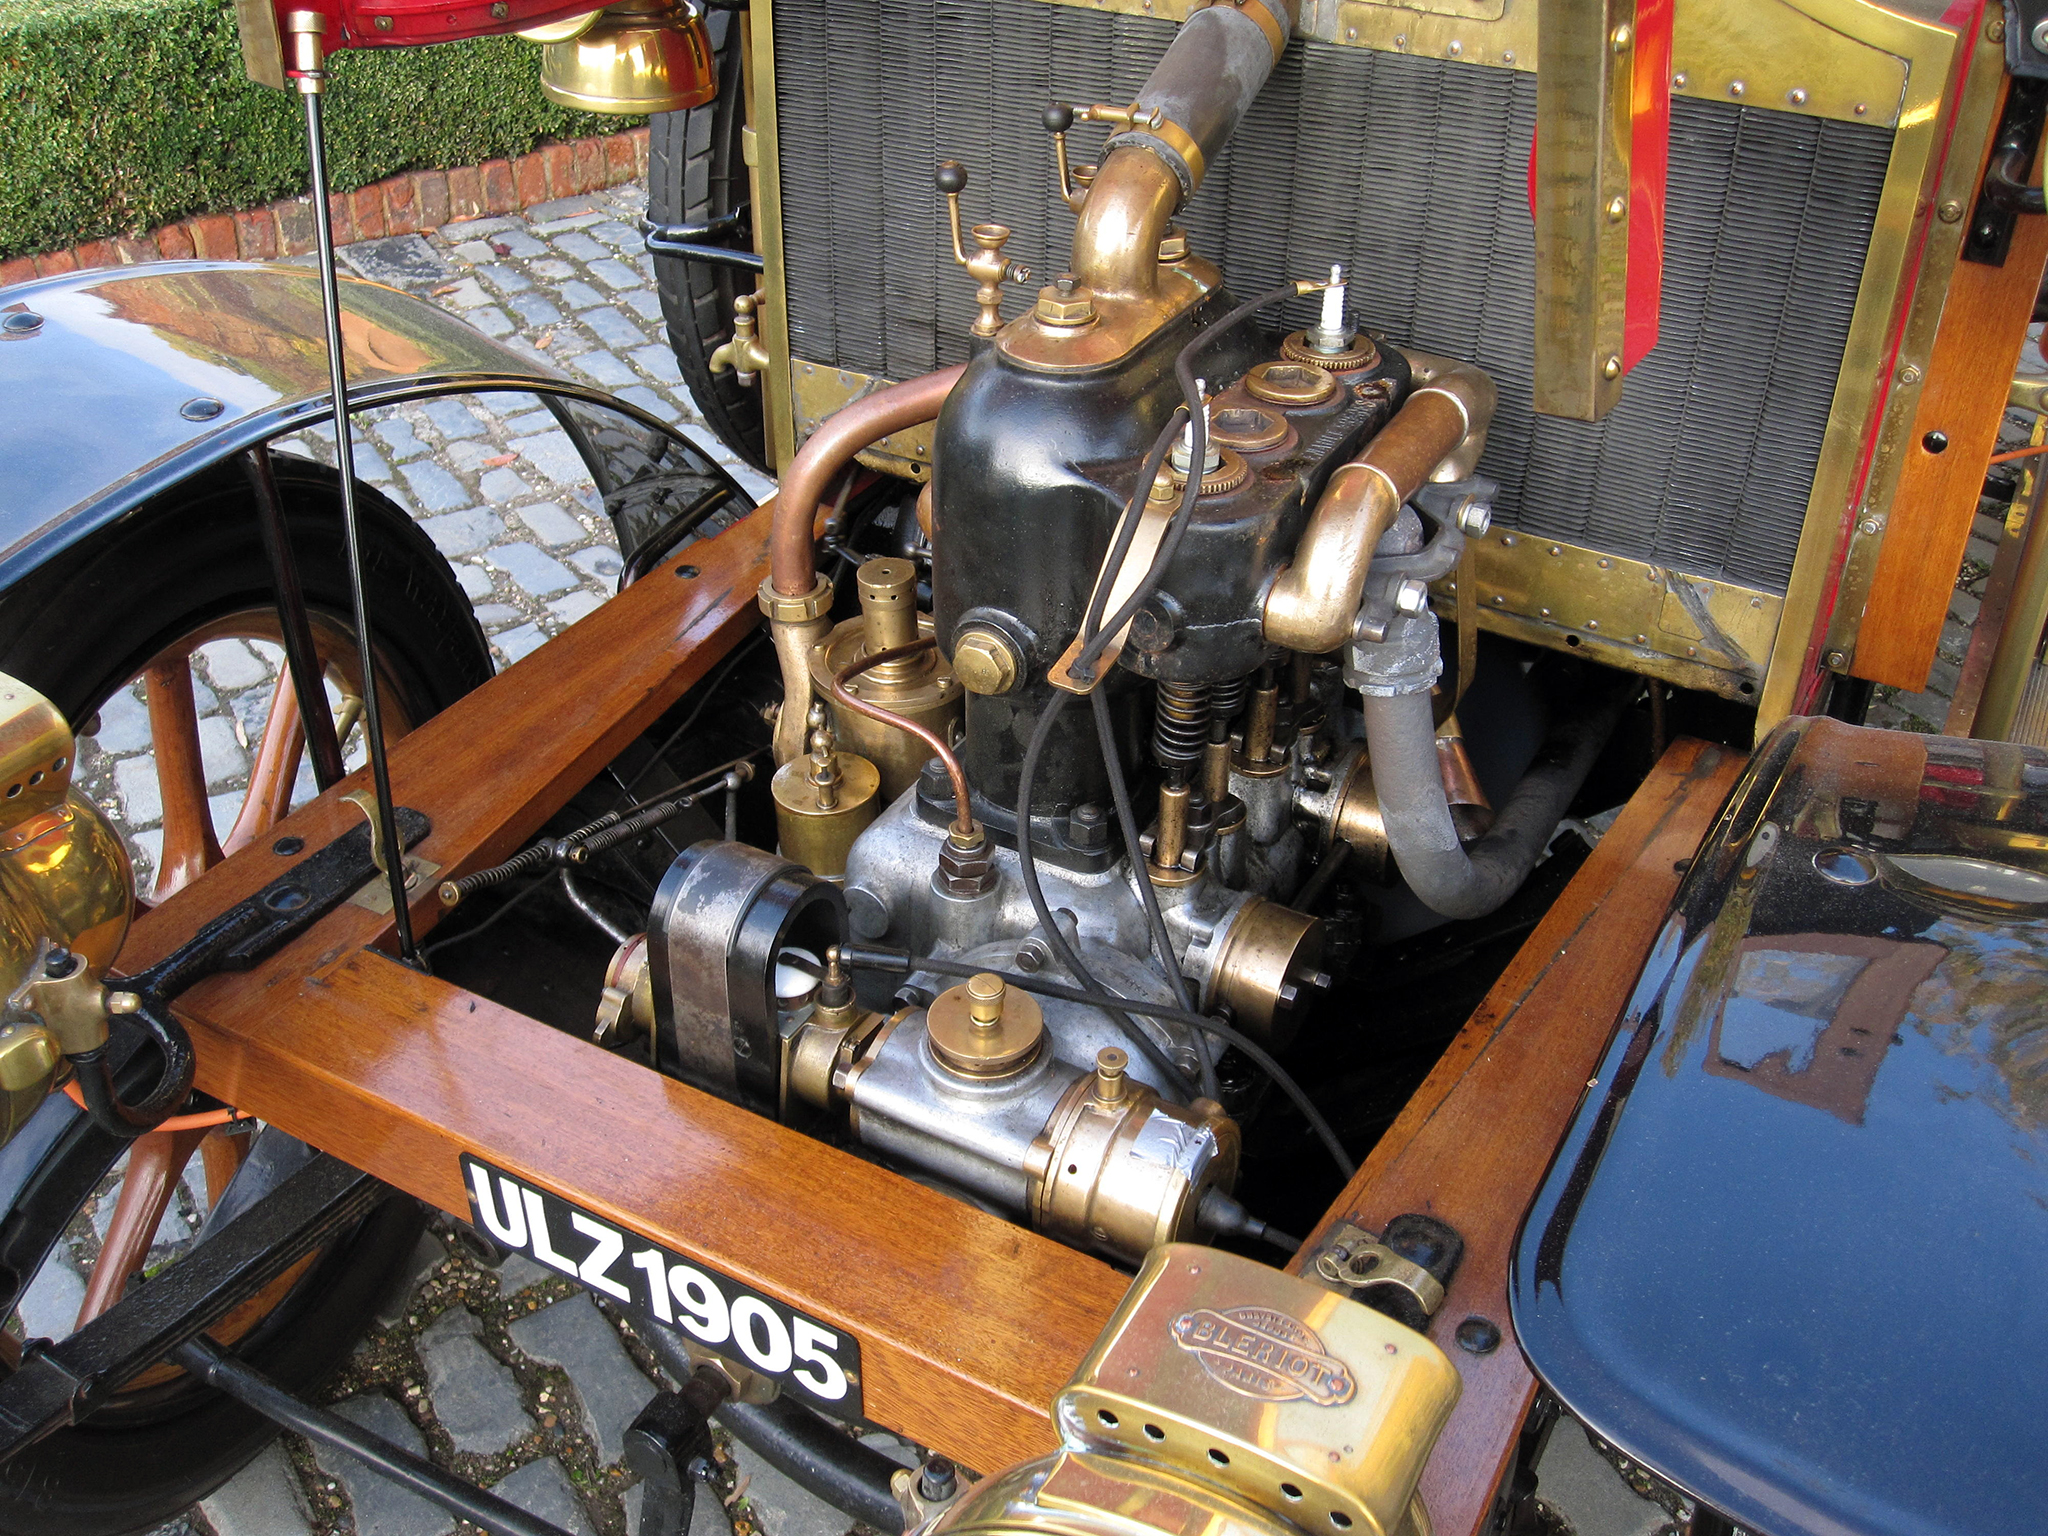 1905 Type D #16